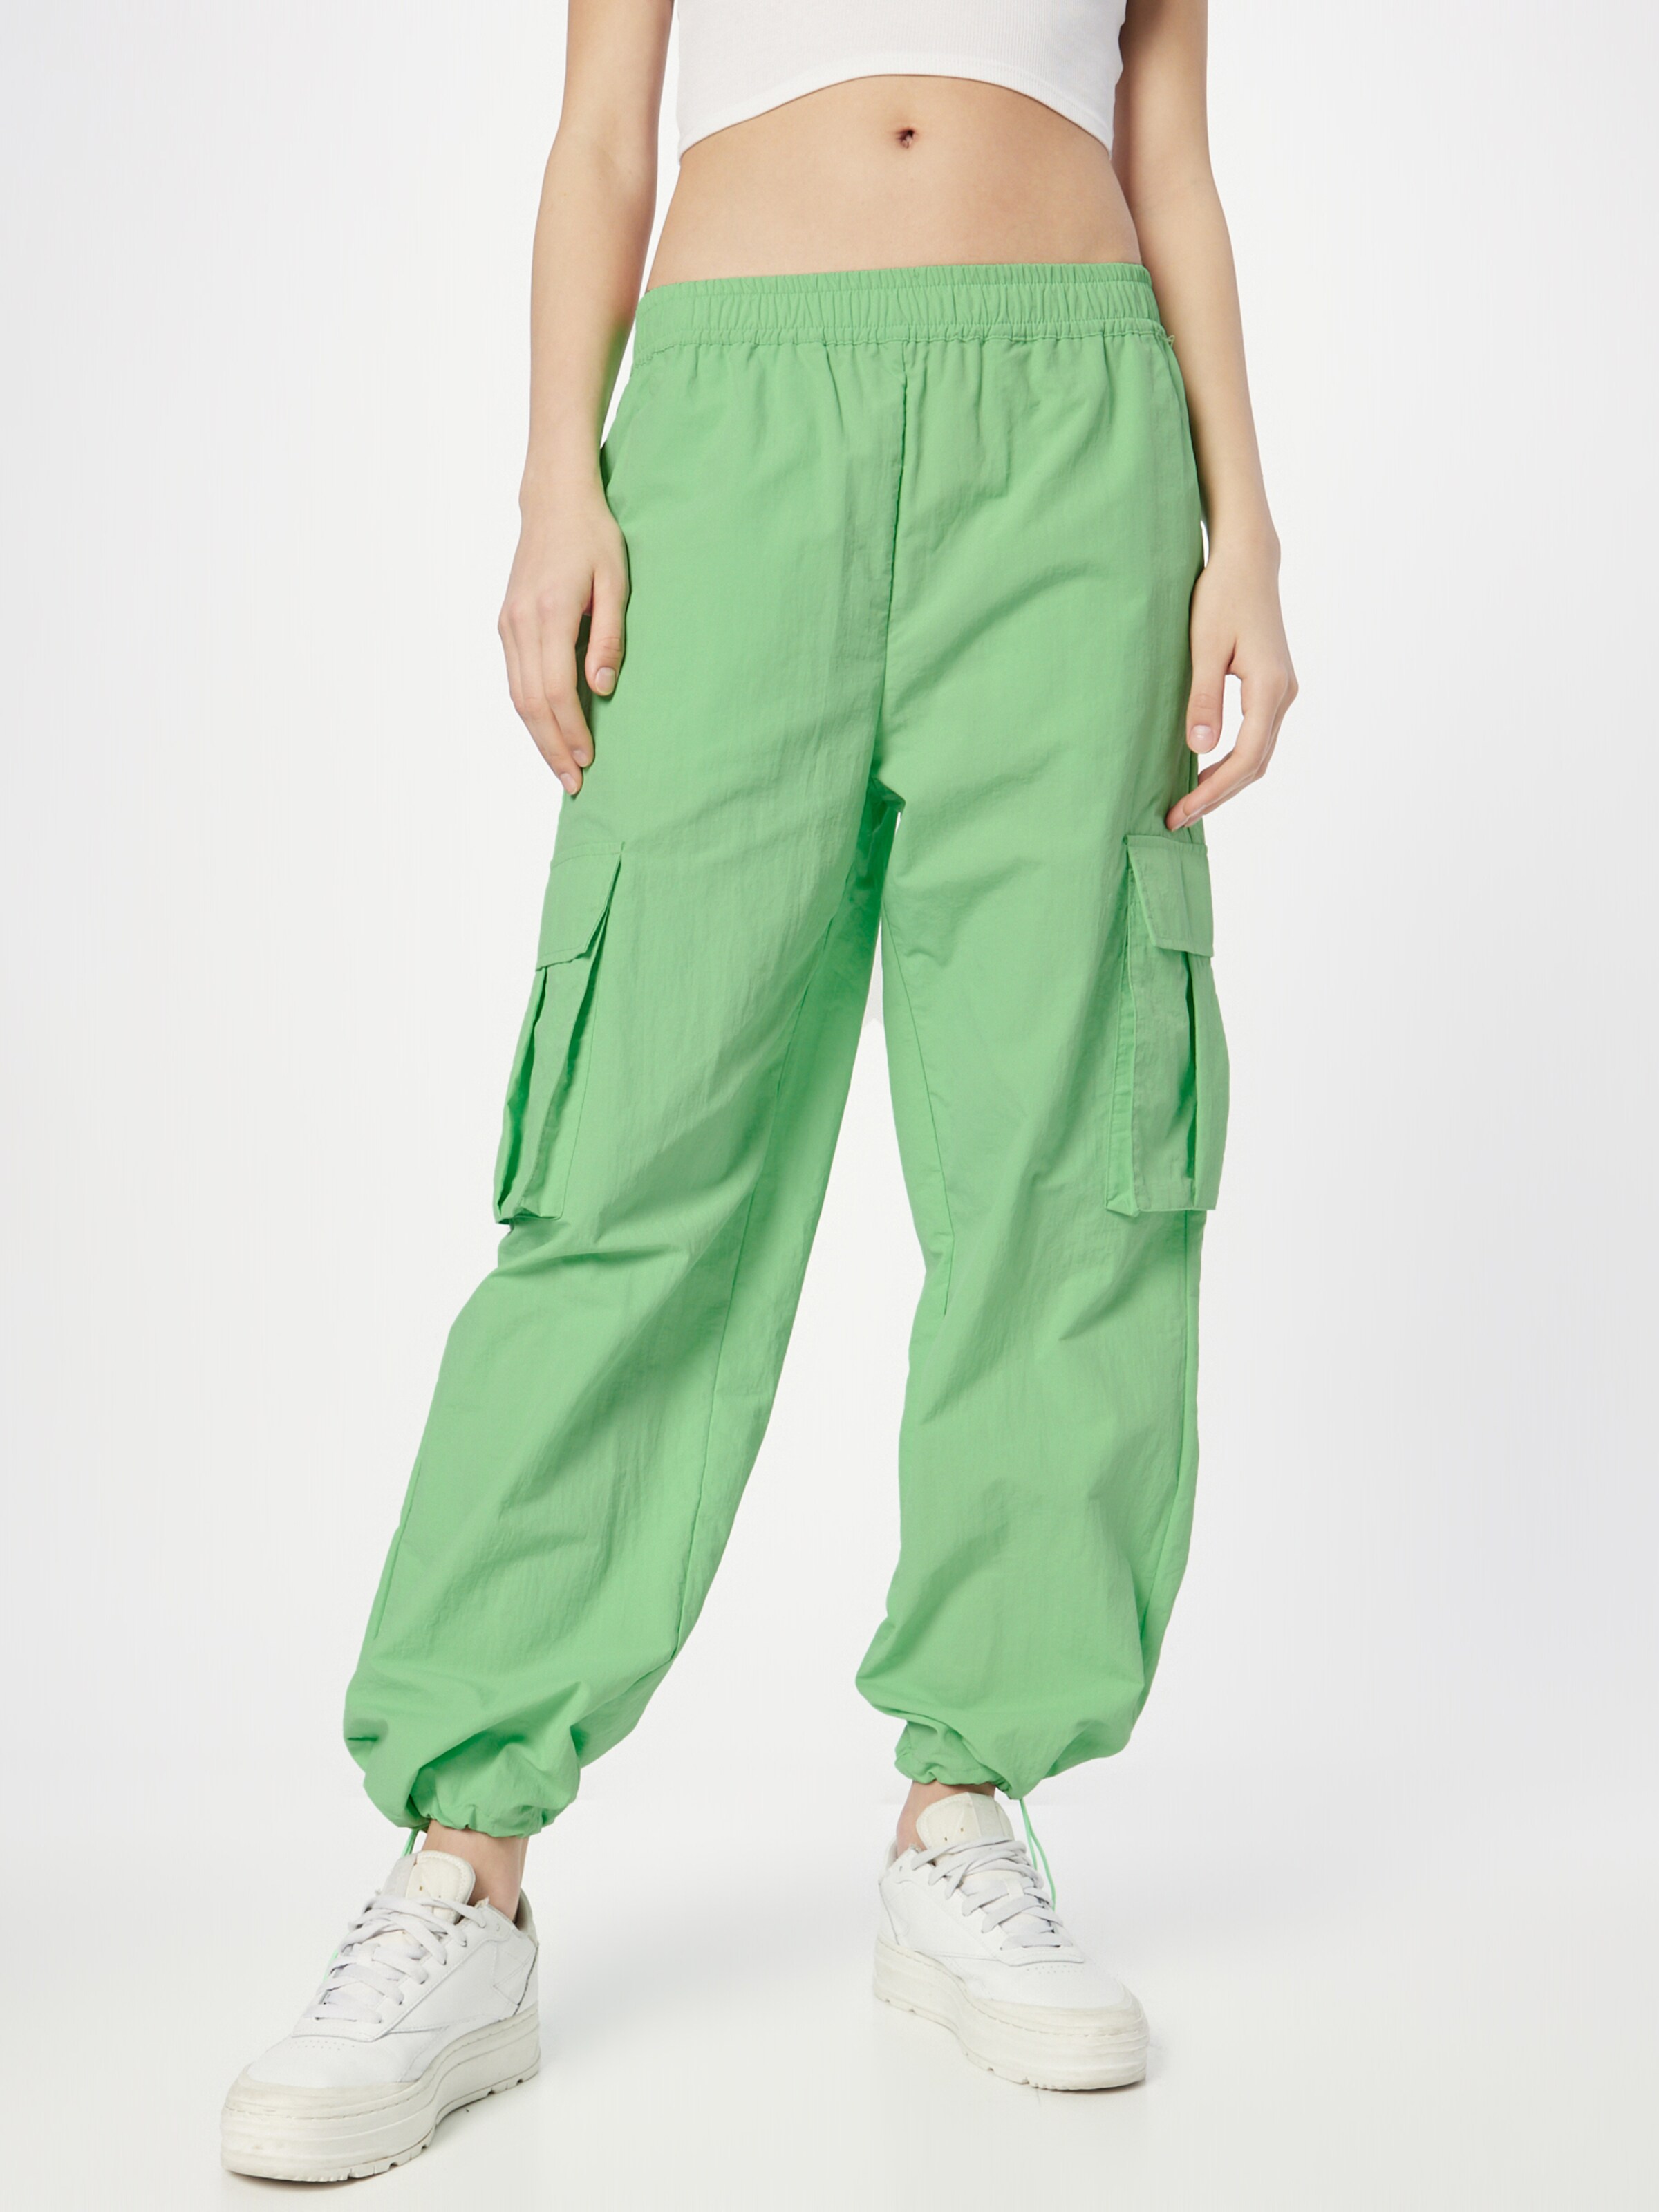 Lime Green Cargo Pants - Imber Vintage